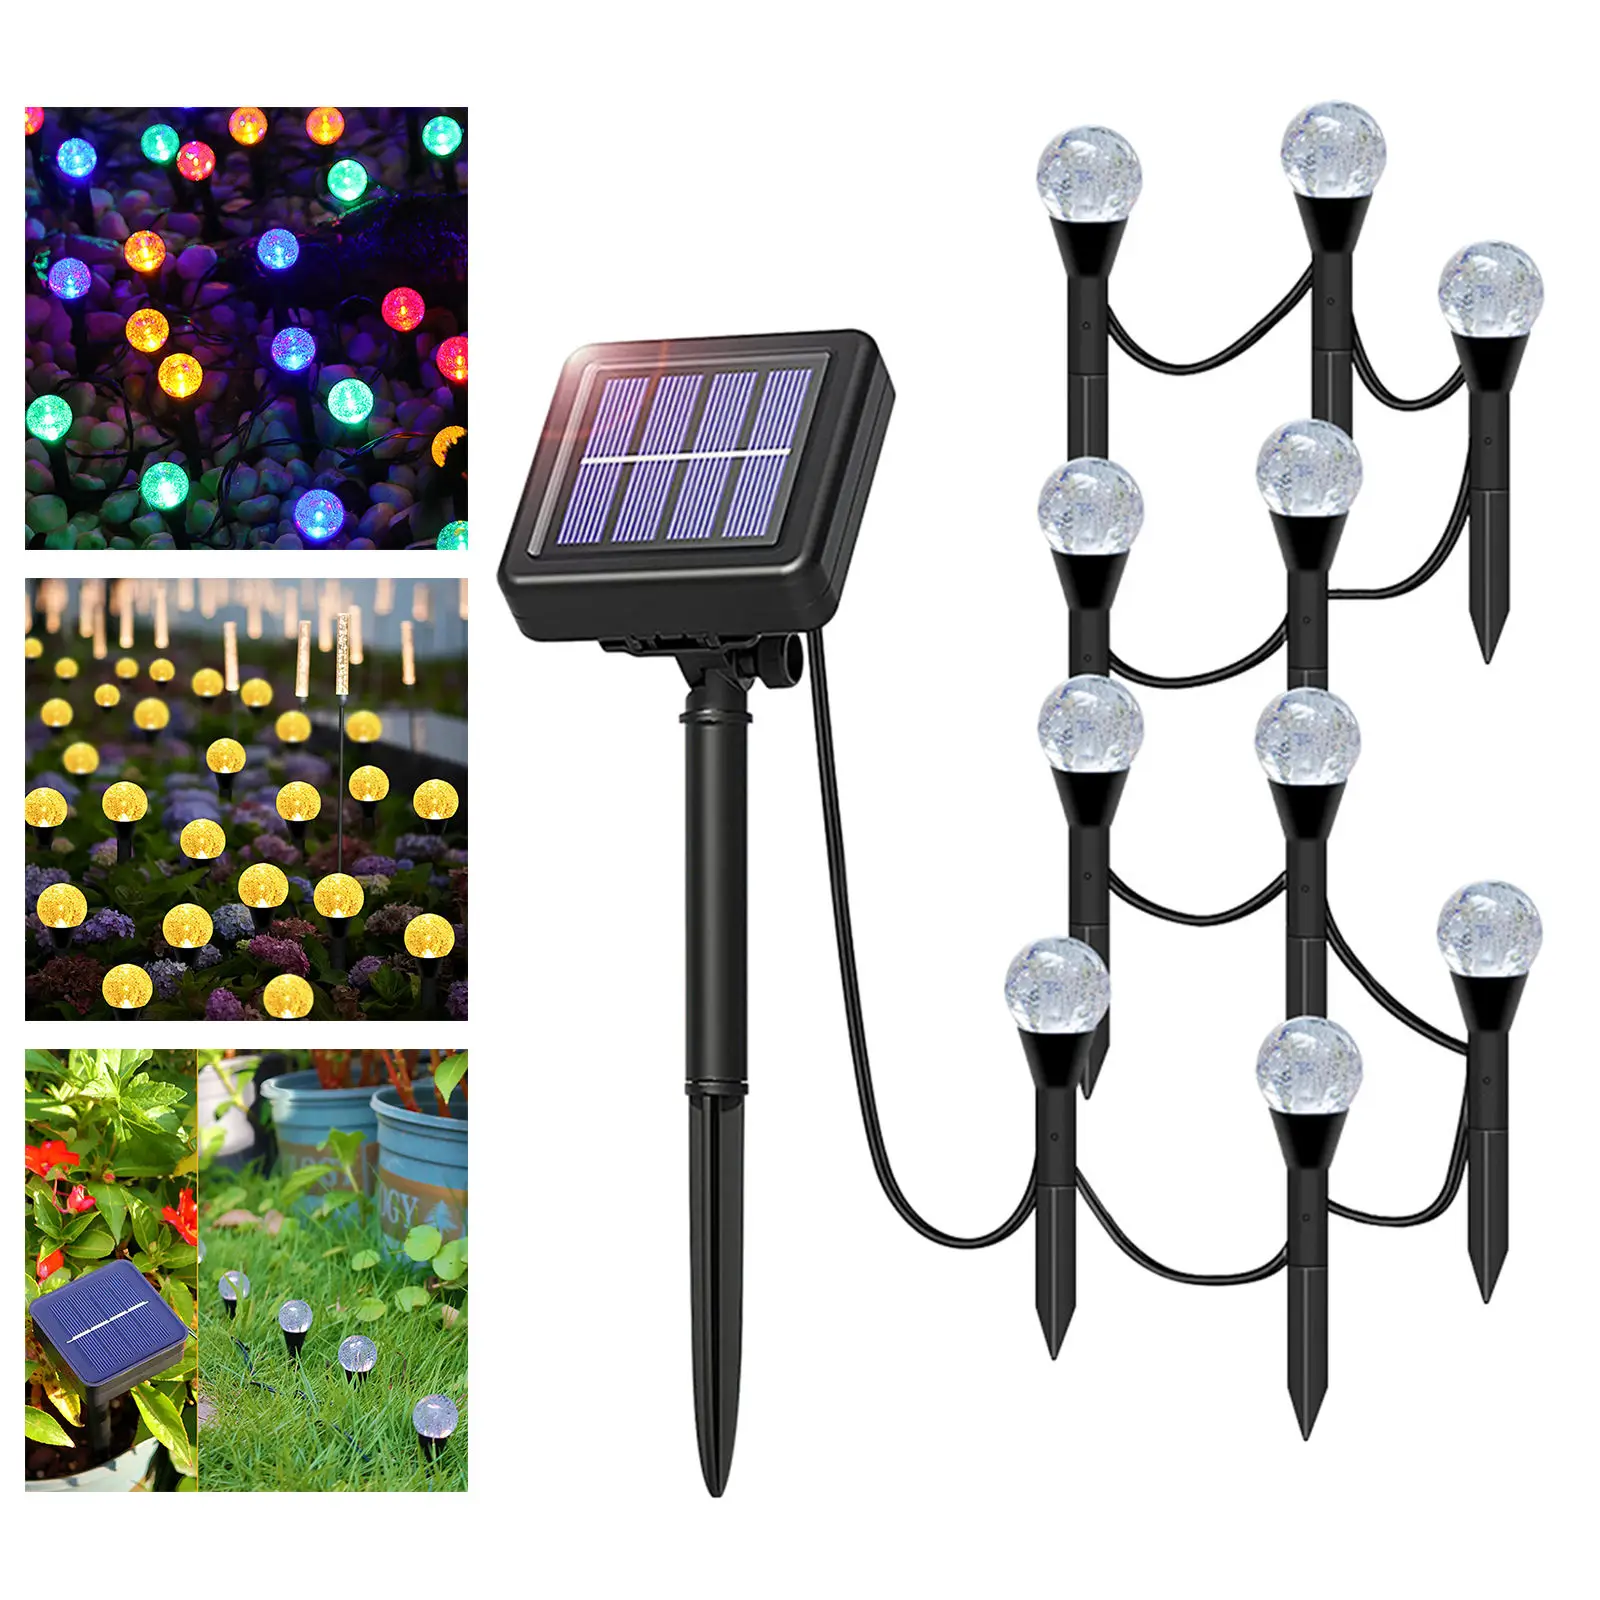 IP55 Waterproof 10-in-1 Solar Light Garden Lights Night Lamp Garden Stake for Yard Lawn Backyard Patio Driveway Auto On/Off